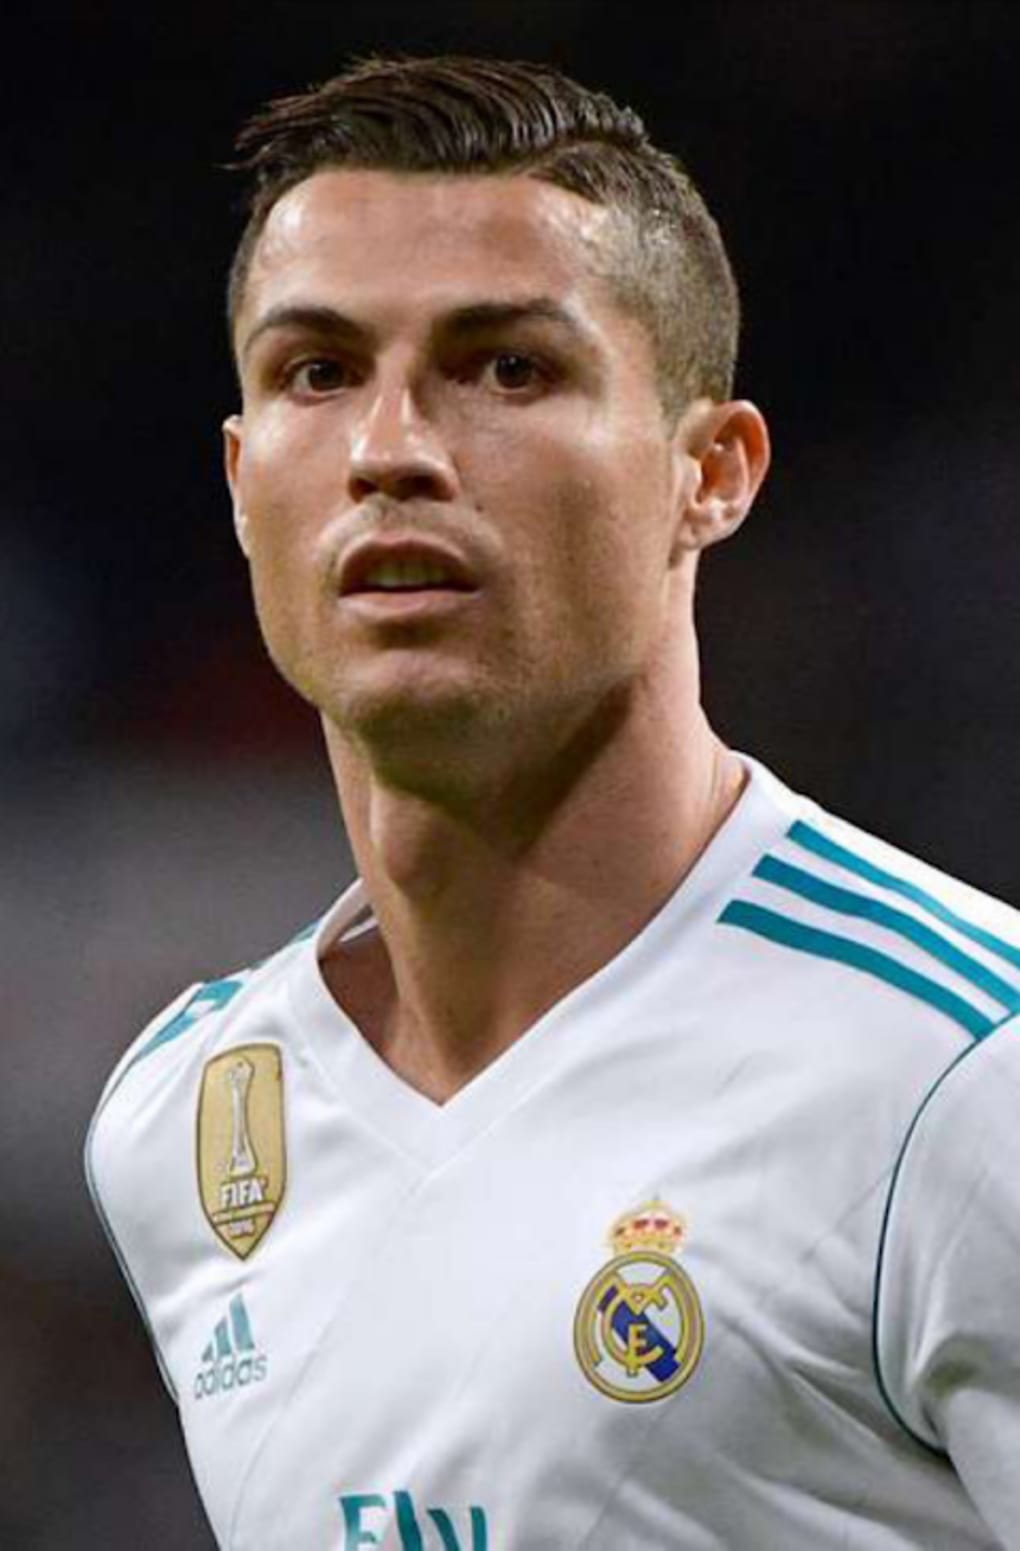 Cristiano Ronaldo HD wallpapers